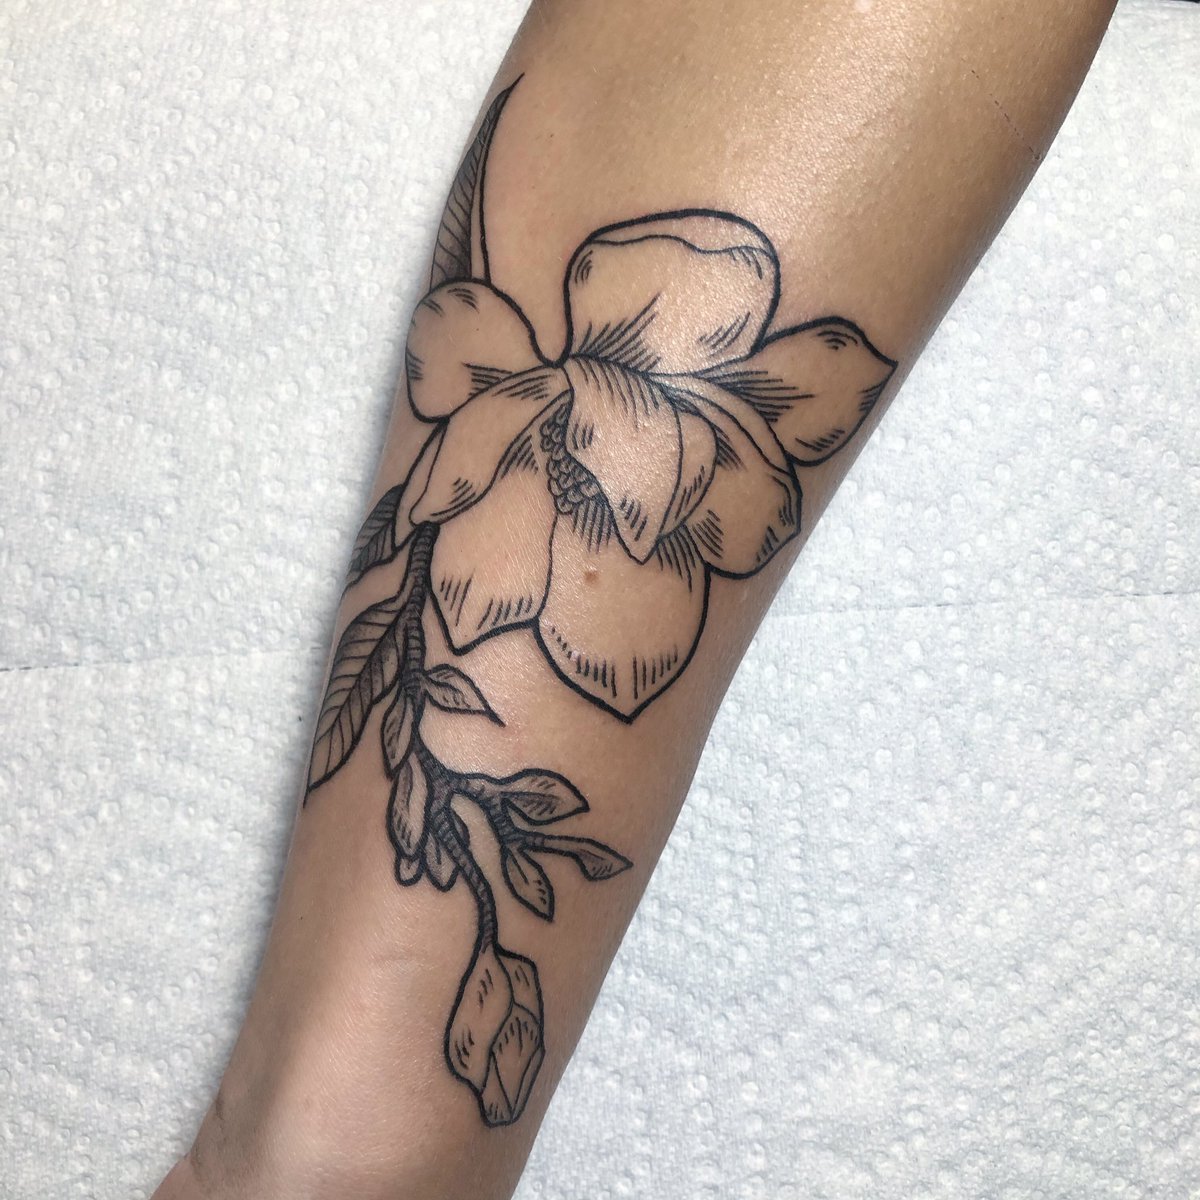 Magnolias for Kasey
Email to book 
Webber.artwork@gmail.com
•
•
•
#tattoos #tat #illustration #tattooartist #dallastattoo #floraltattoo #tattoodesign #magnolia #art #artist #dallas #dallastattoos #dallastattooartist #texasinked #texastattoos #cutetattoos